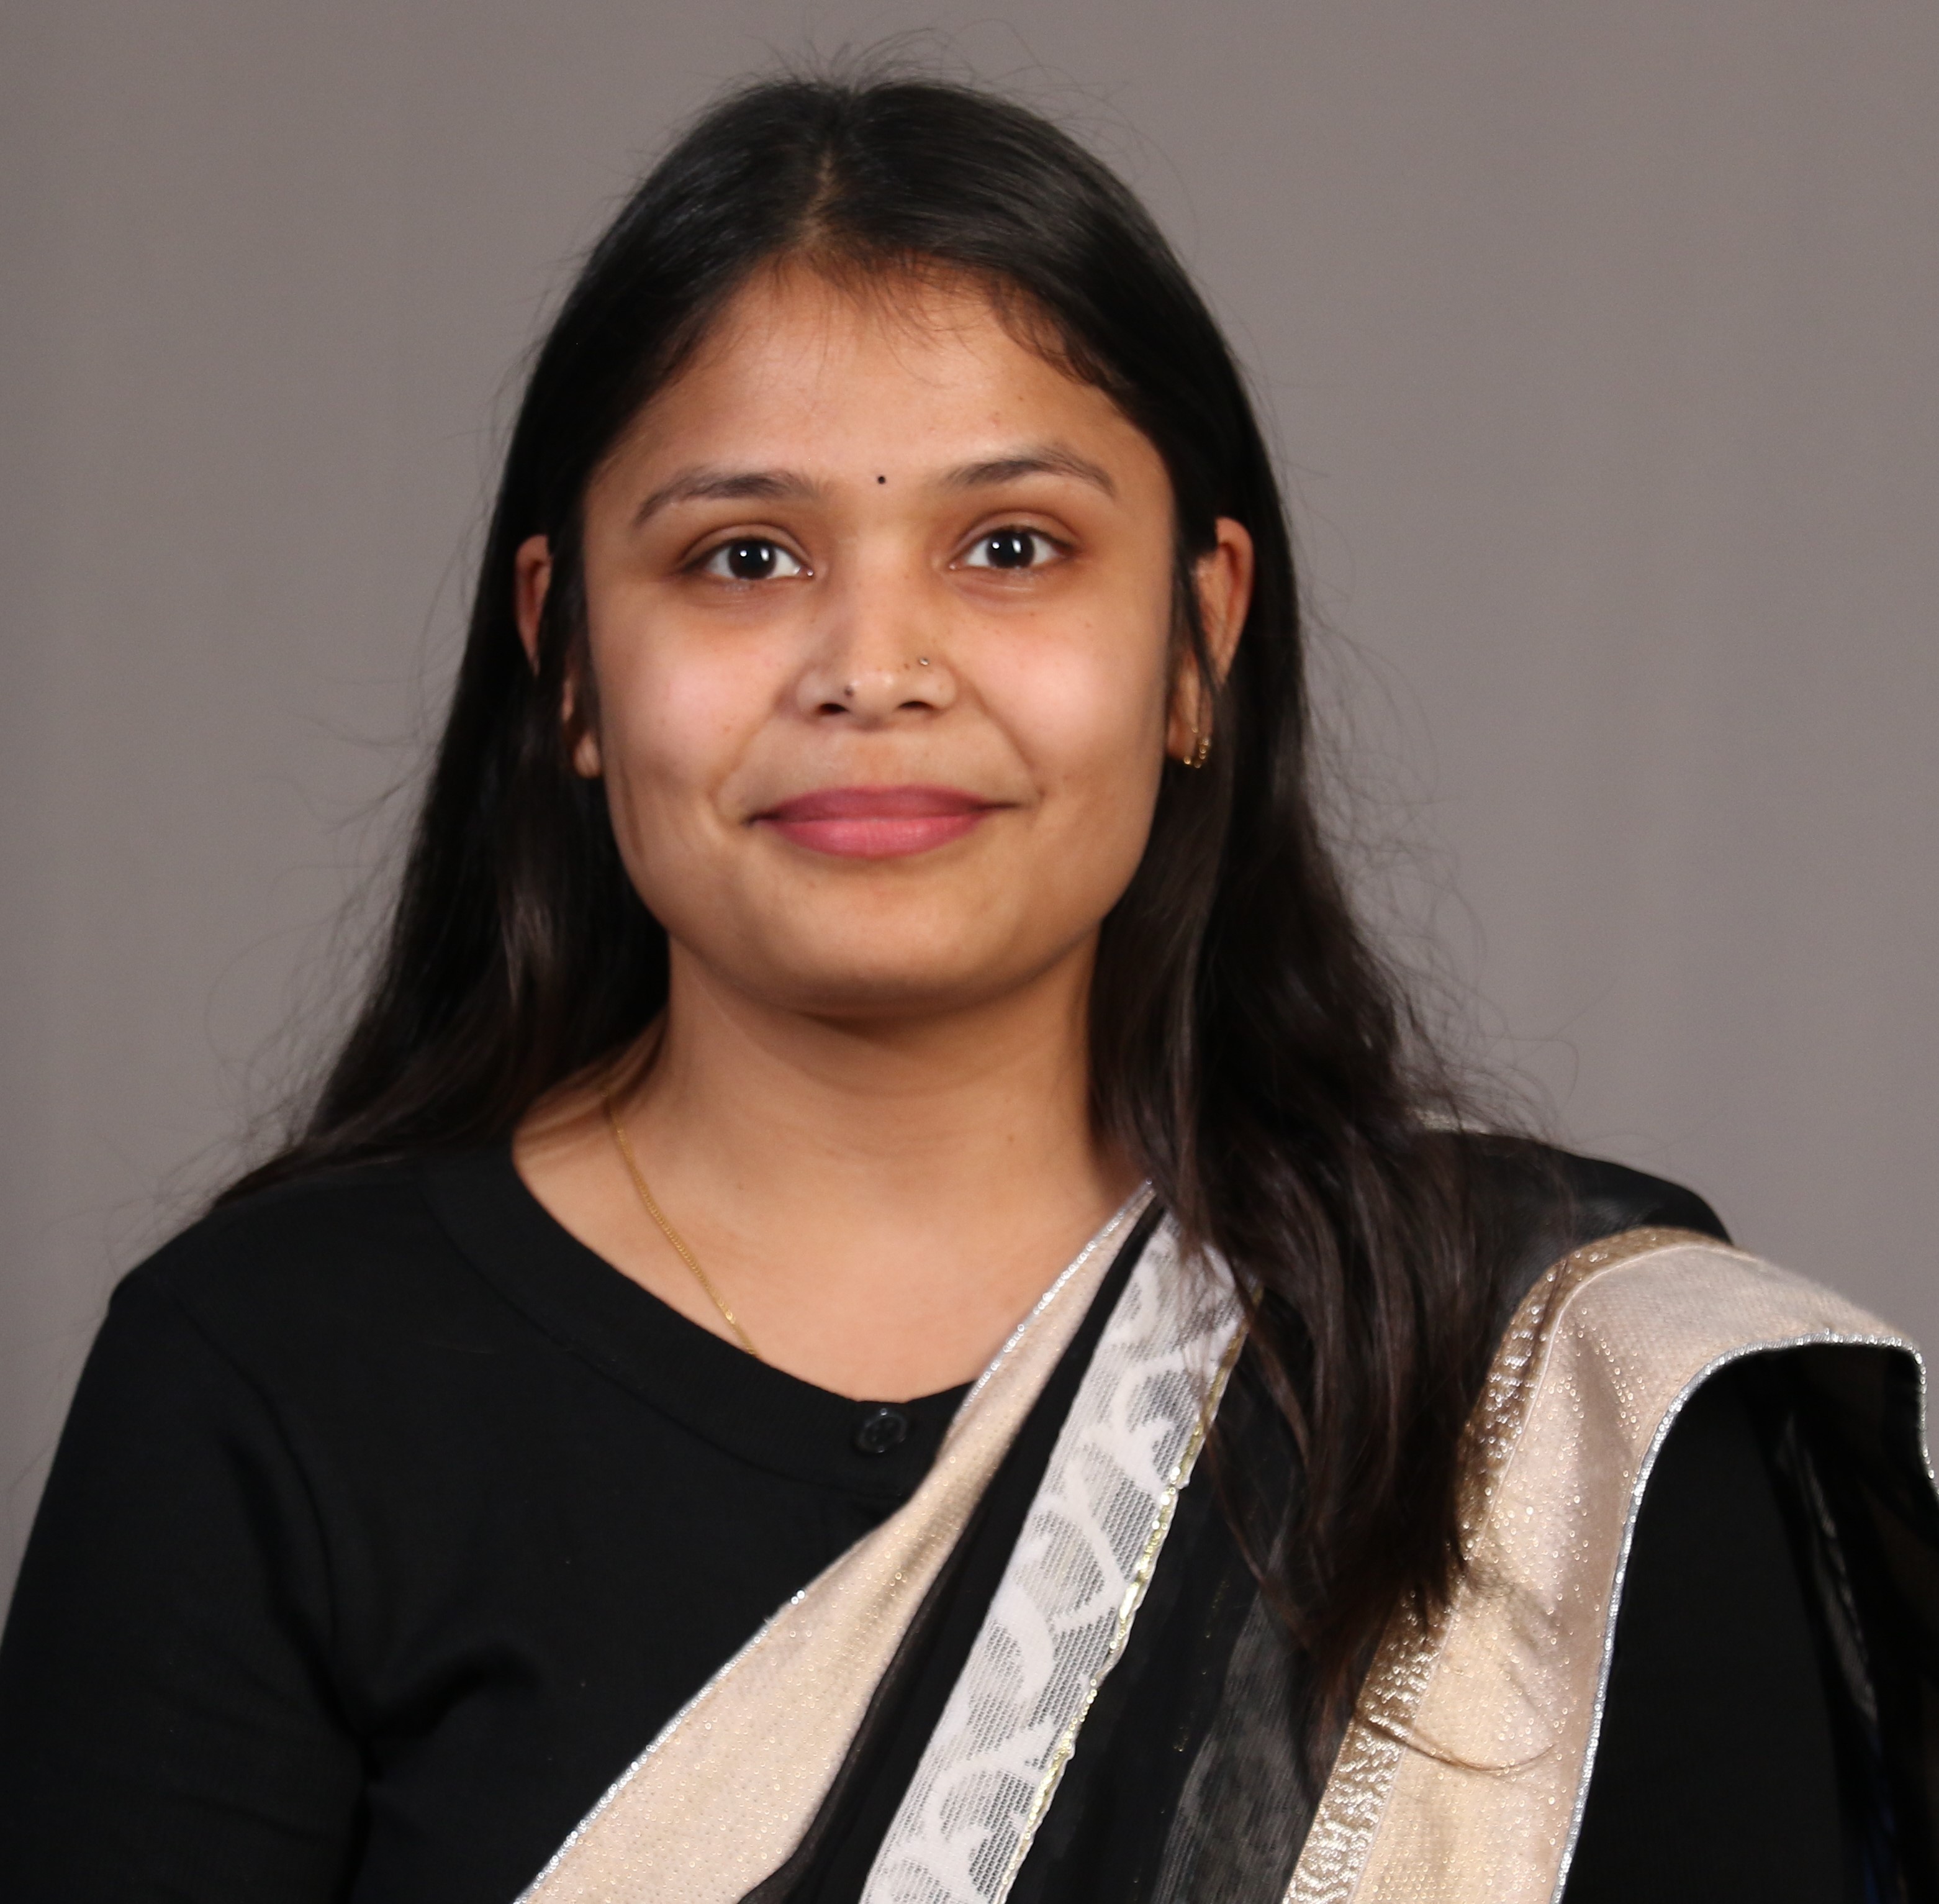 Ms. Aditi Mishra